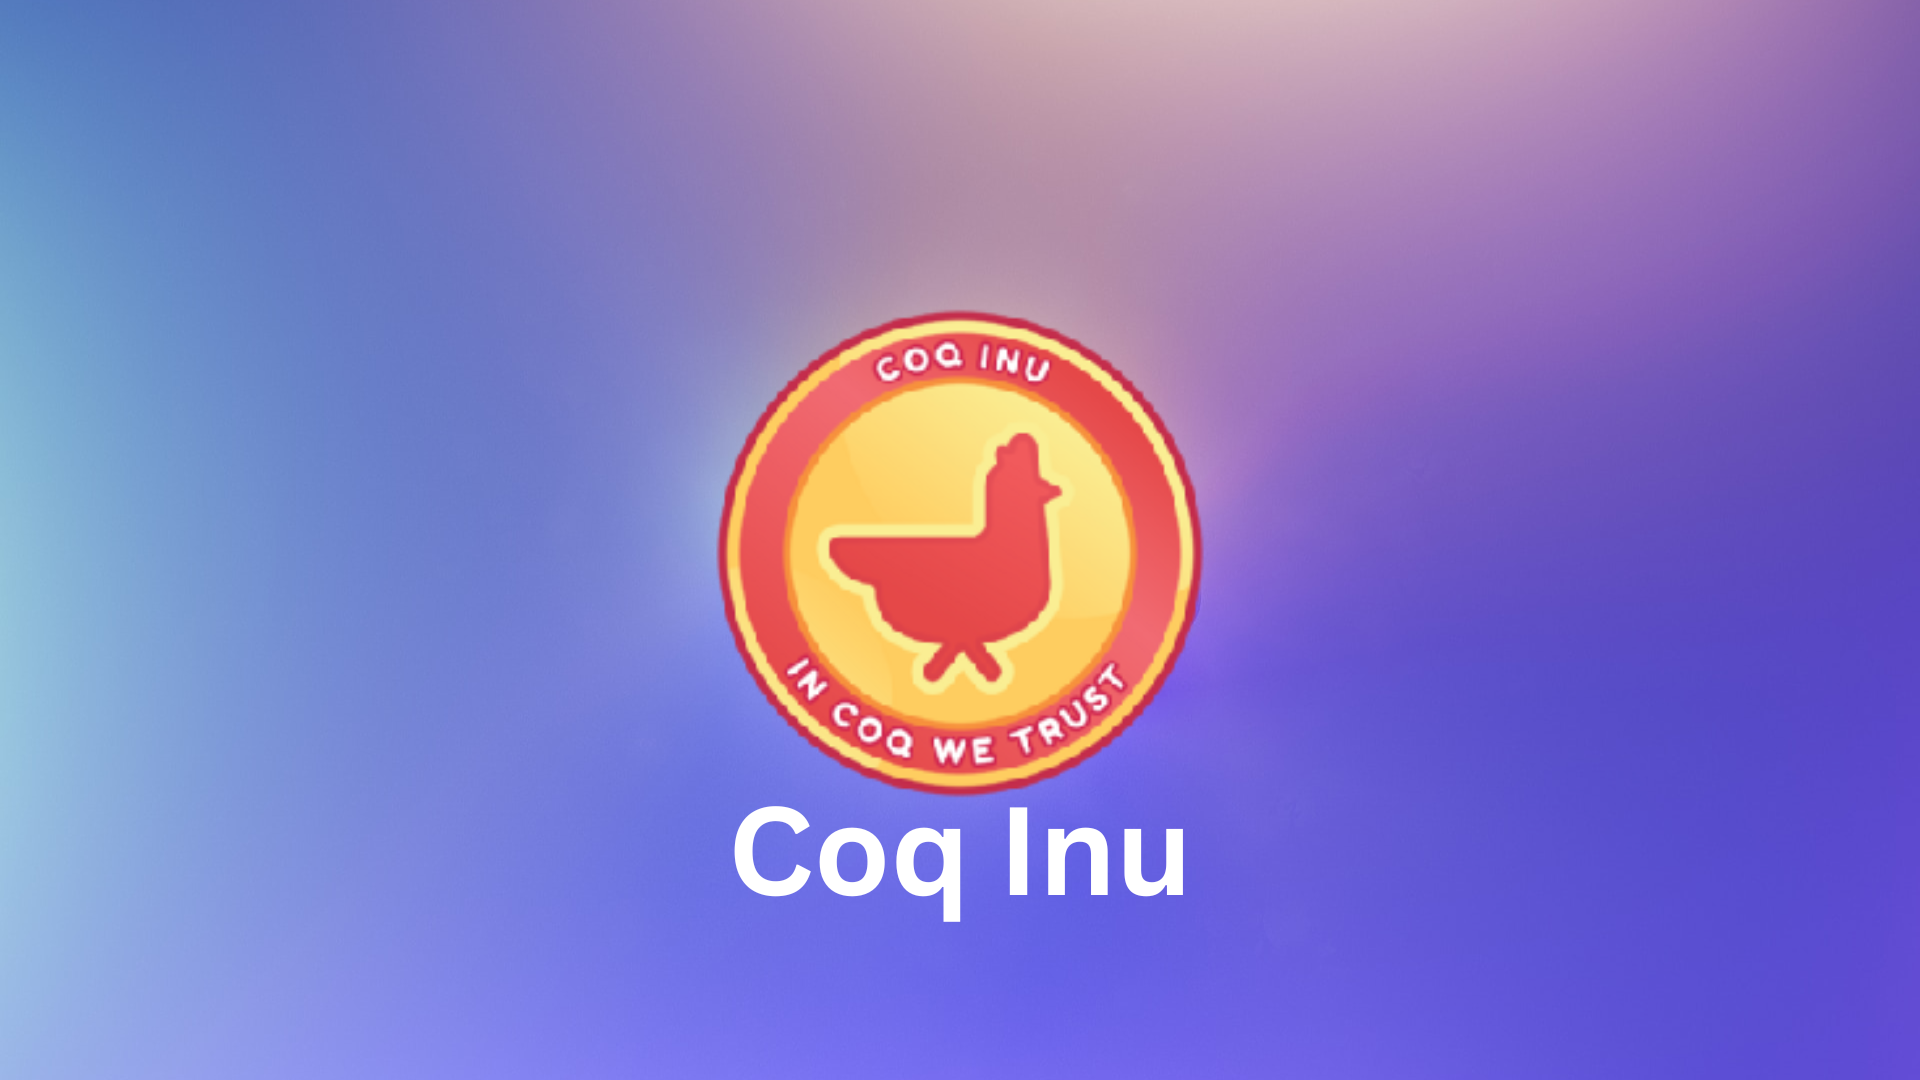 Coq Inu Price